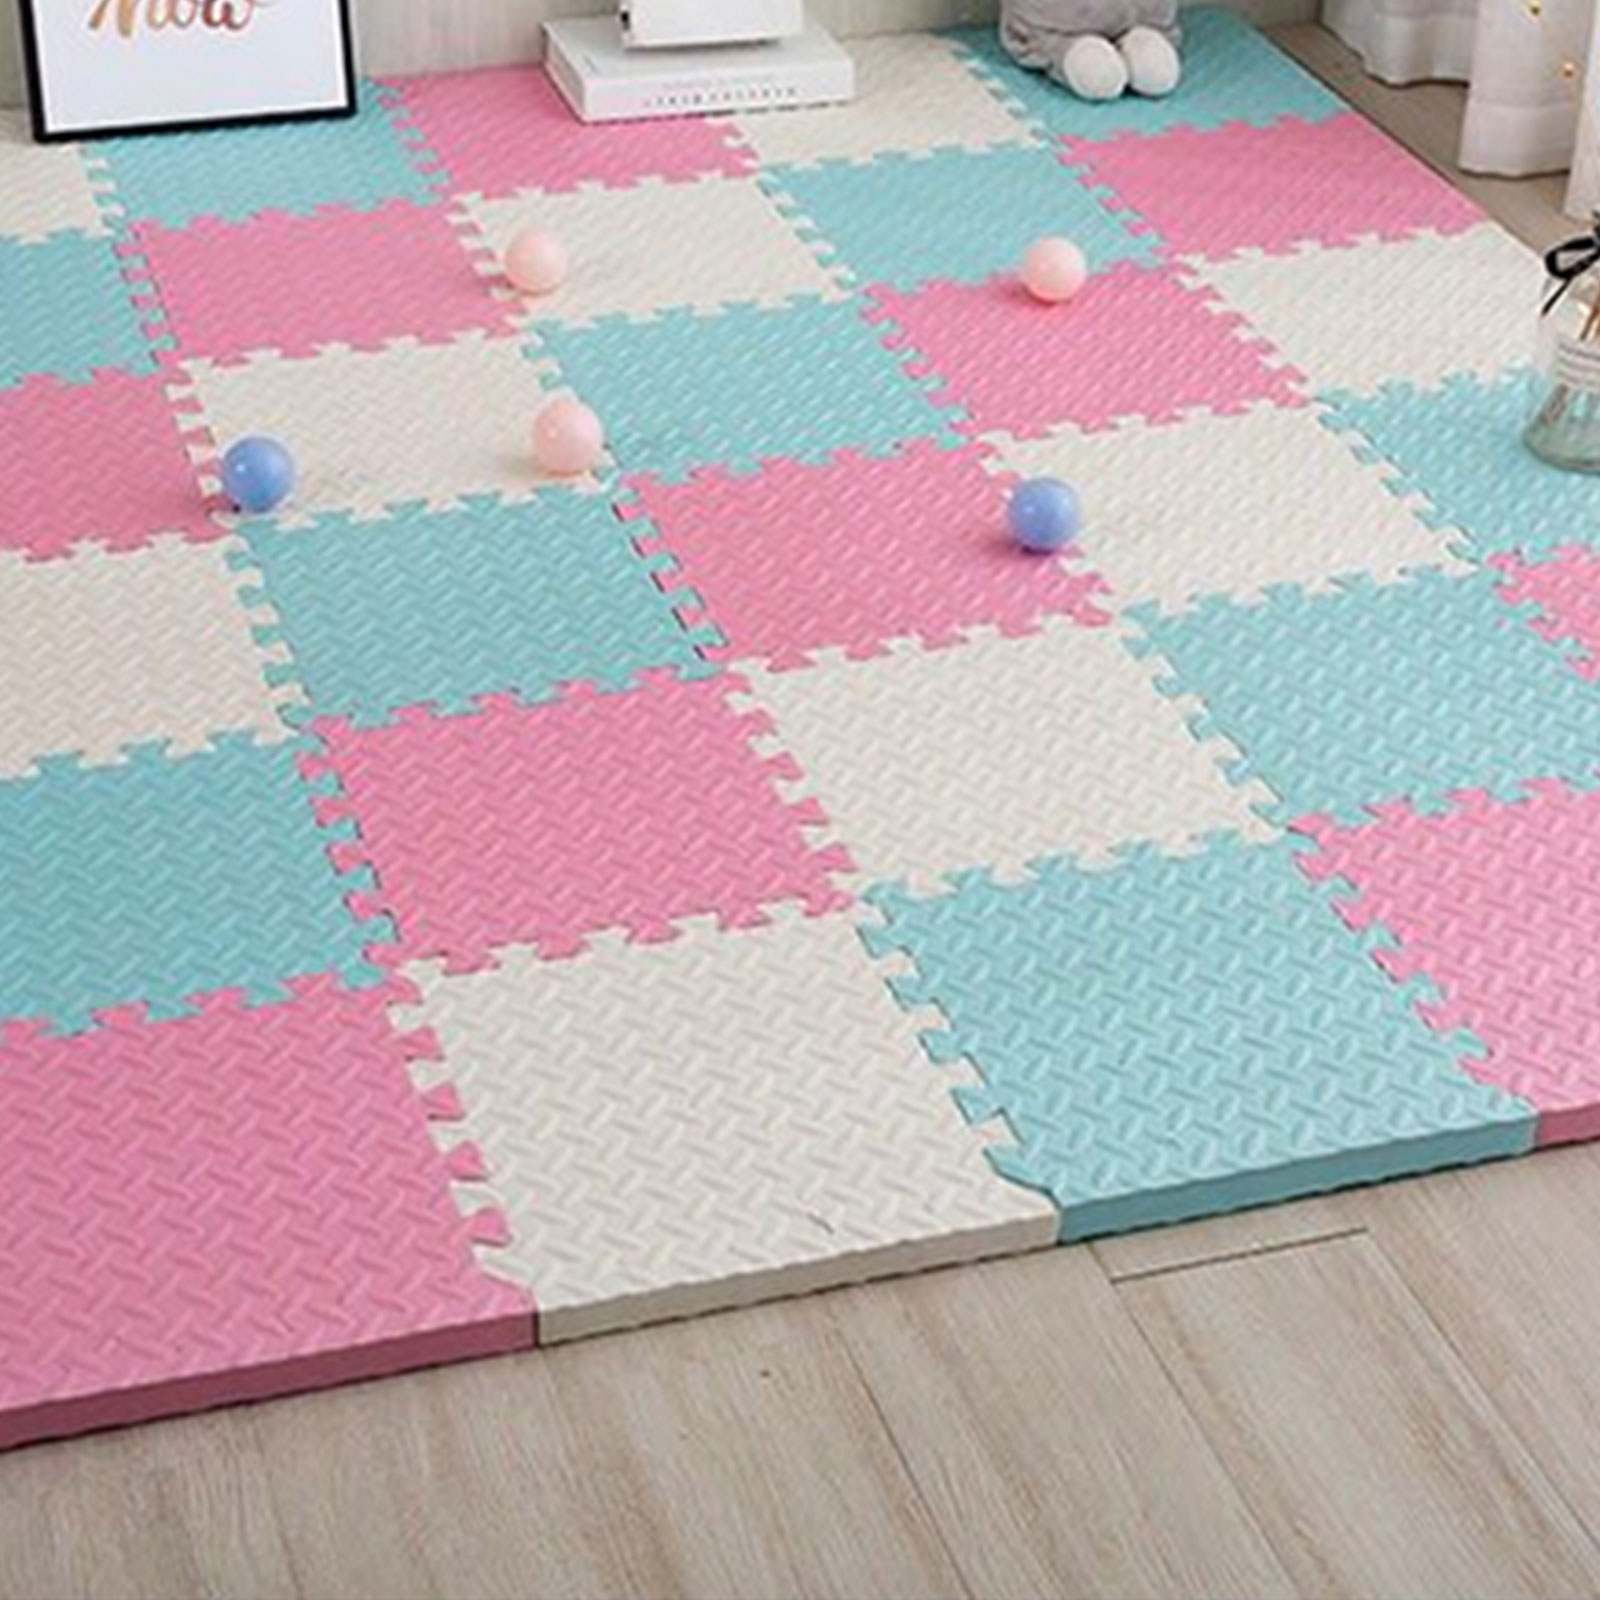 Cozylkx Puzzle Floor Mat, Plush Foam Mats, 16 Fluffy Carpet Tiles Area Rugs  for Kids Room, Baby Room, Nursery Decoration